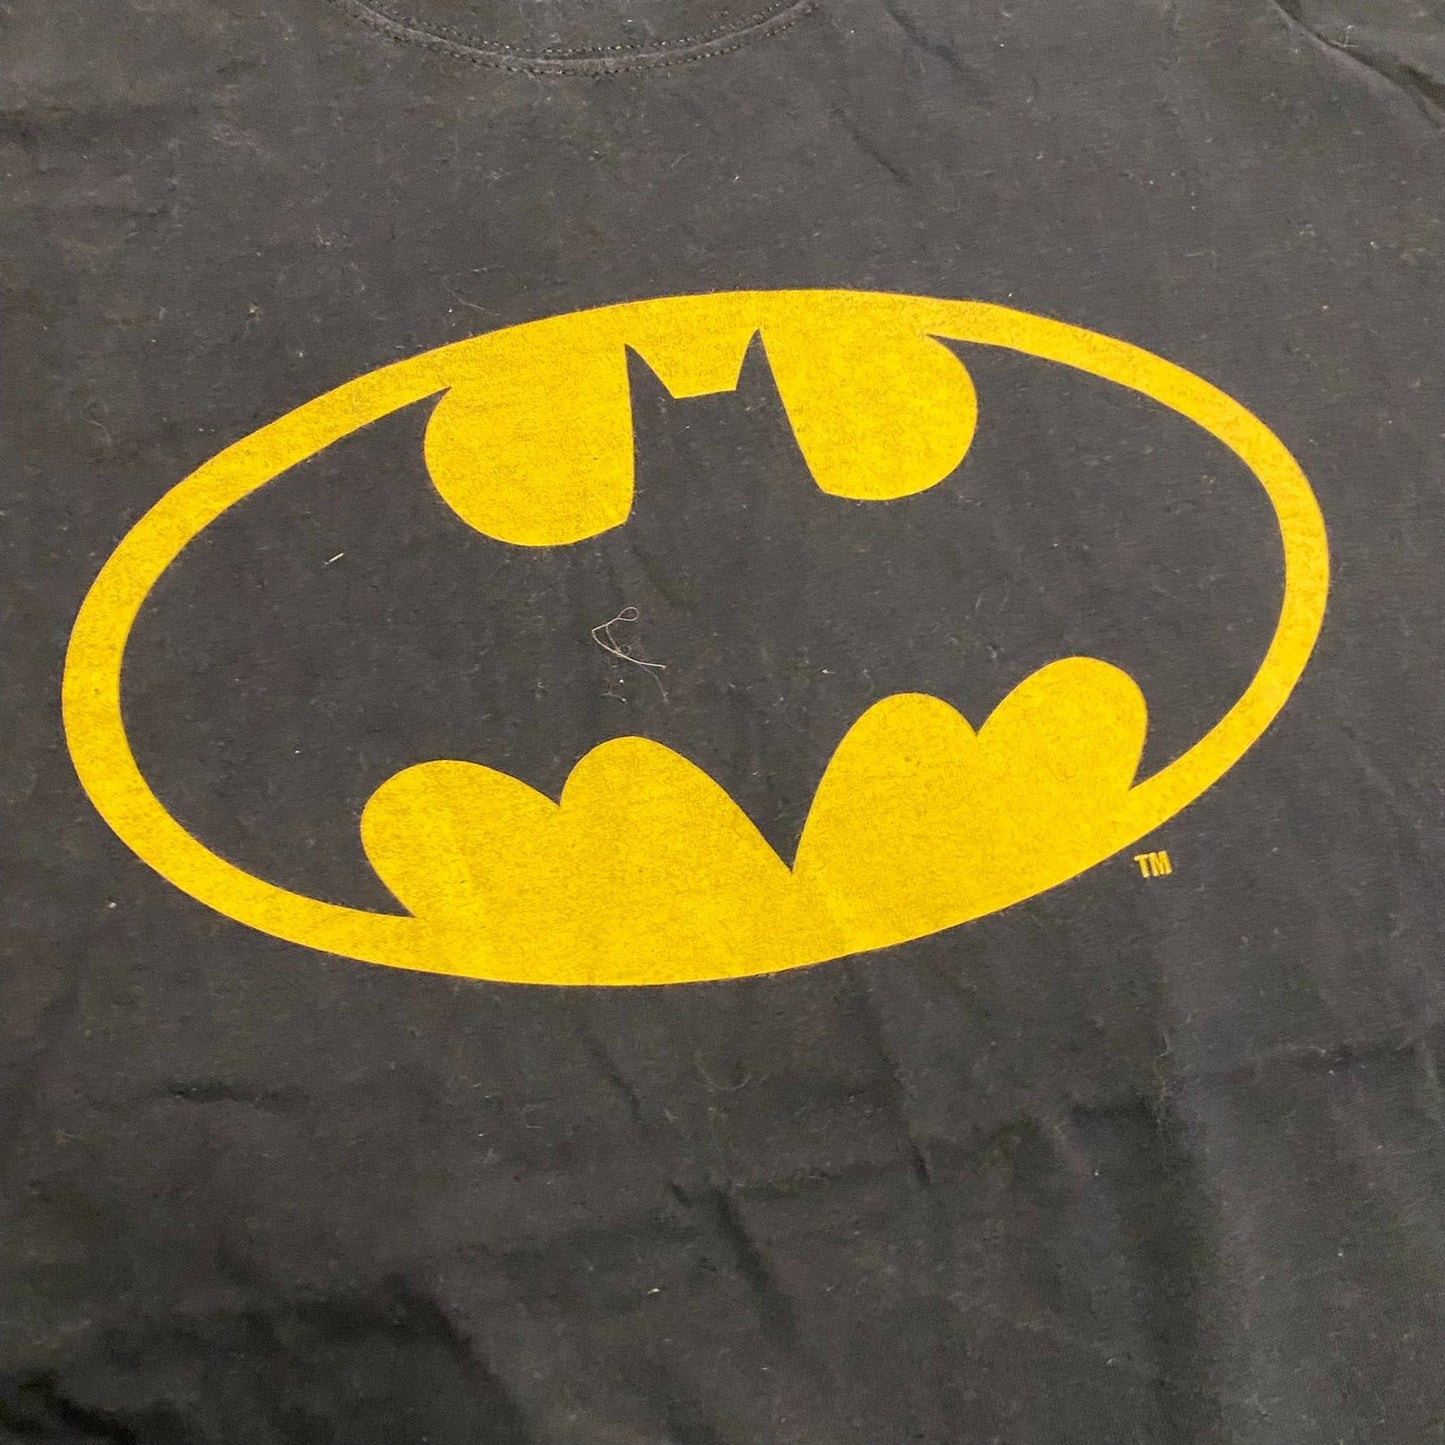 Batman Vintage T-Shirt